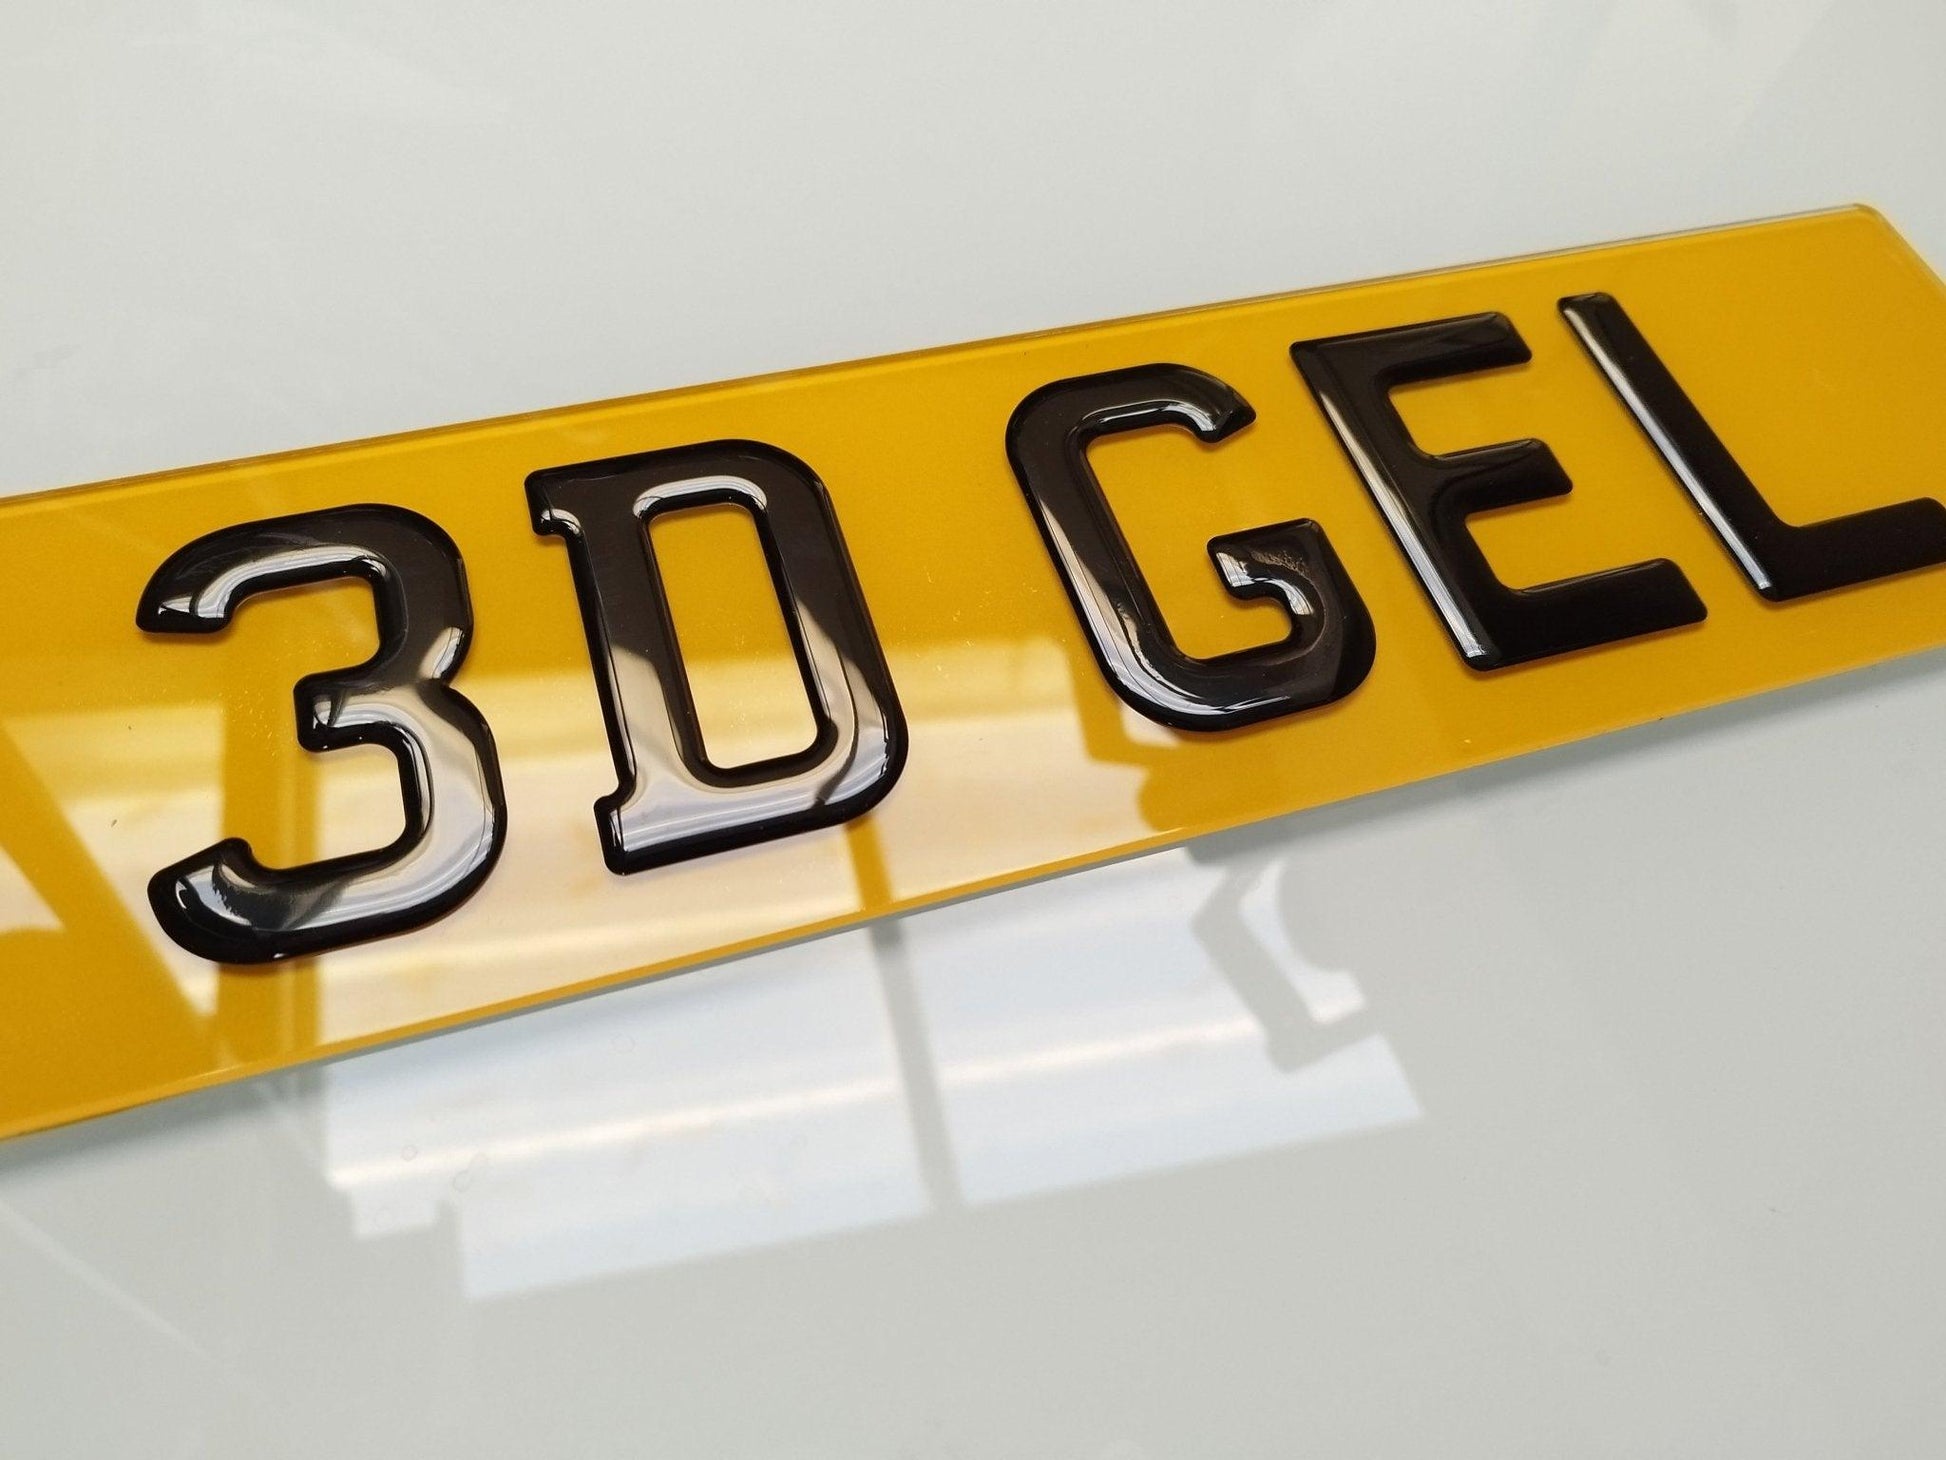 3D Gel Gloss Black Road Legal Number Plates, MOT Friendly, 520mm x 111mm, Standard Oblong 3d gel number plate, Oralite or Nikalite Branded, Car/Van/Trailer Number Plate